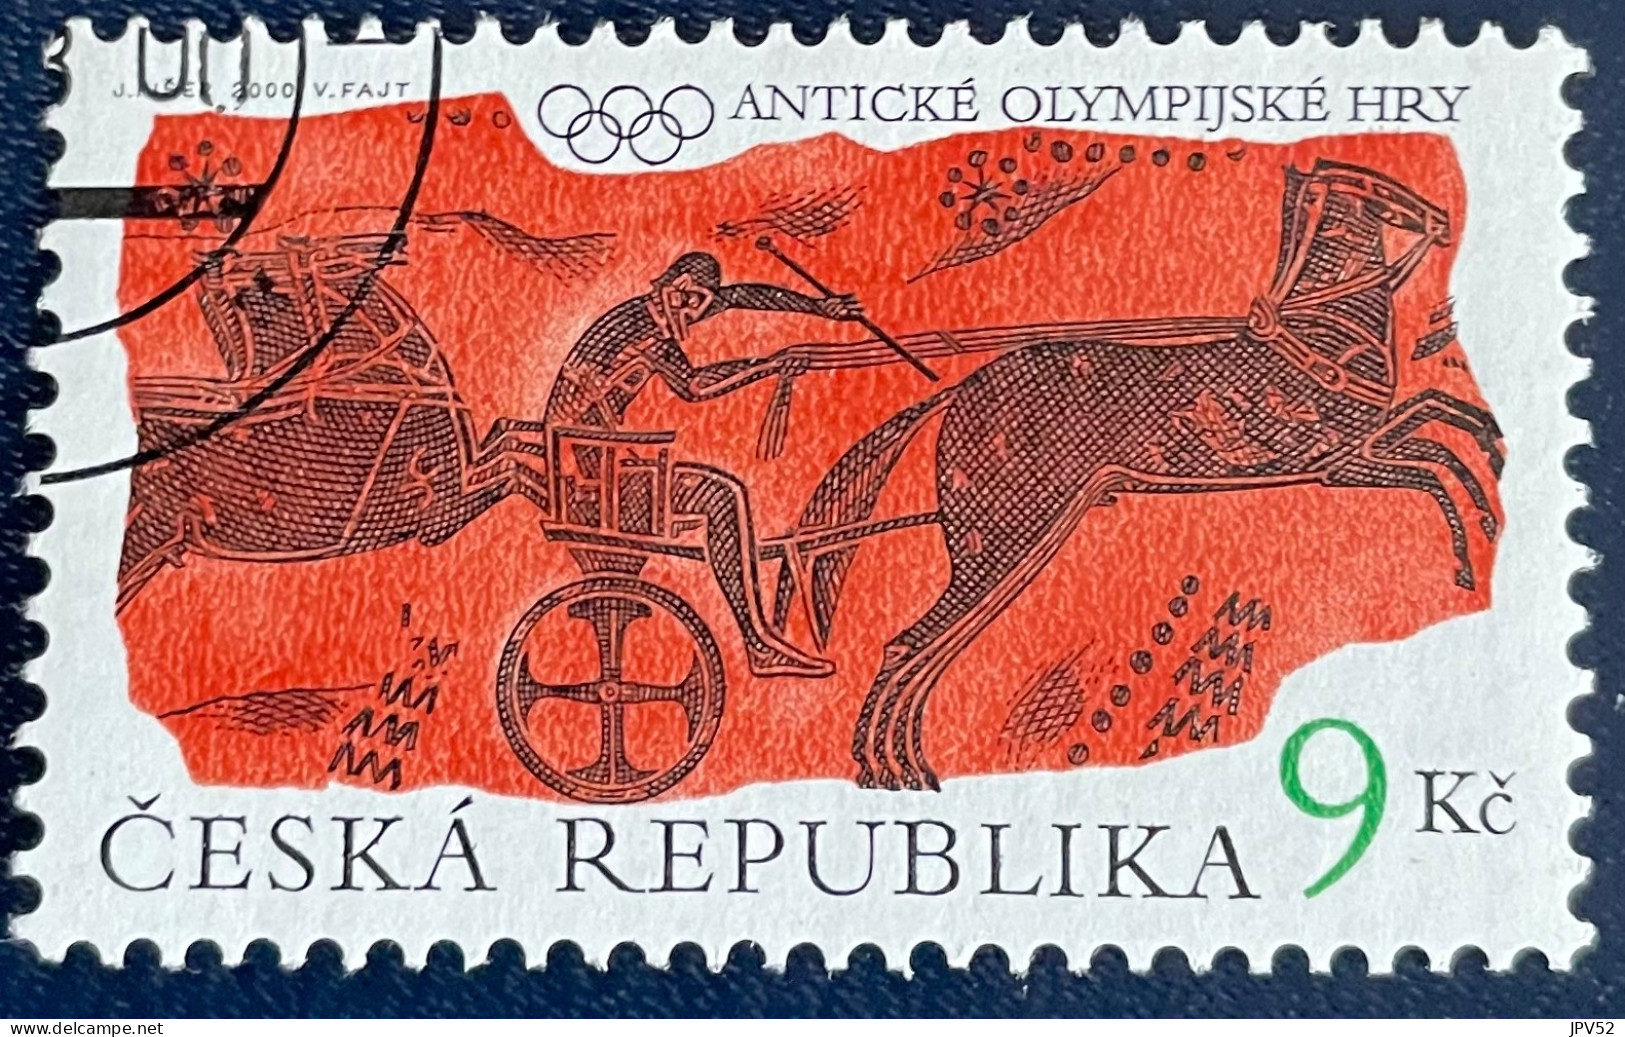 Ceska Republika - Tsjechië - C4/6 - 2000 - (°)used - Michel 268 - Oude Olympische Spelen - Usati